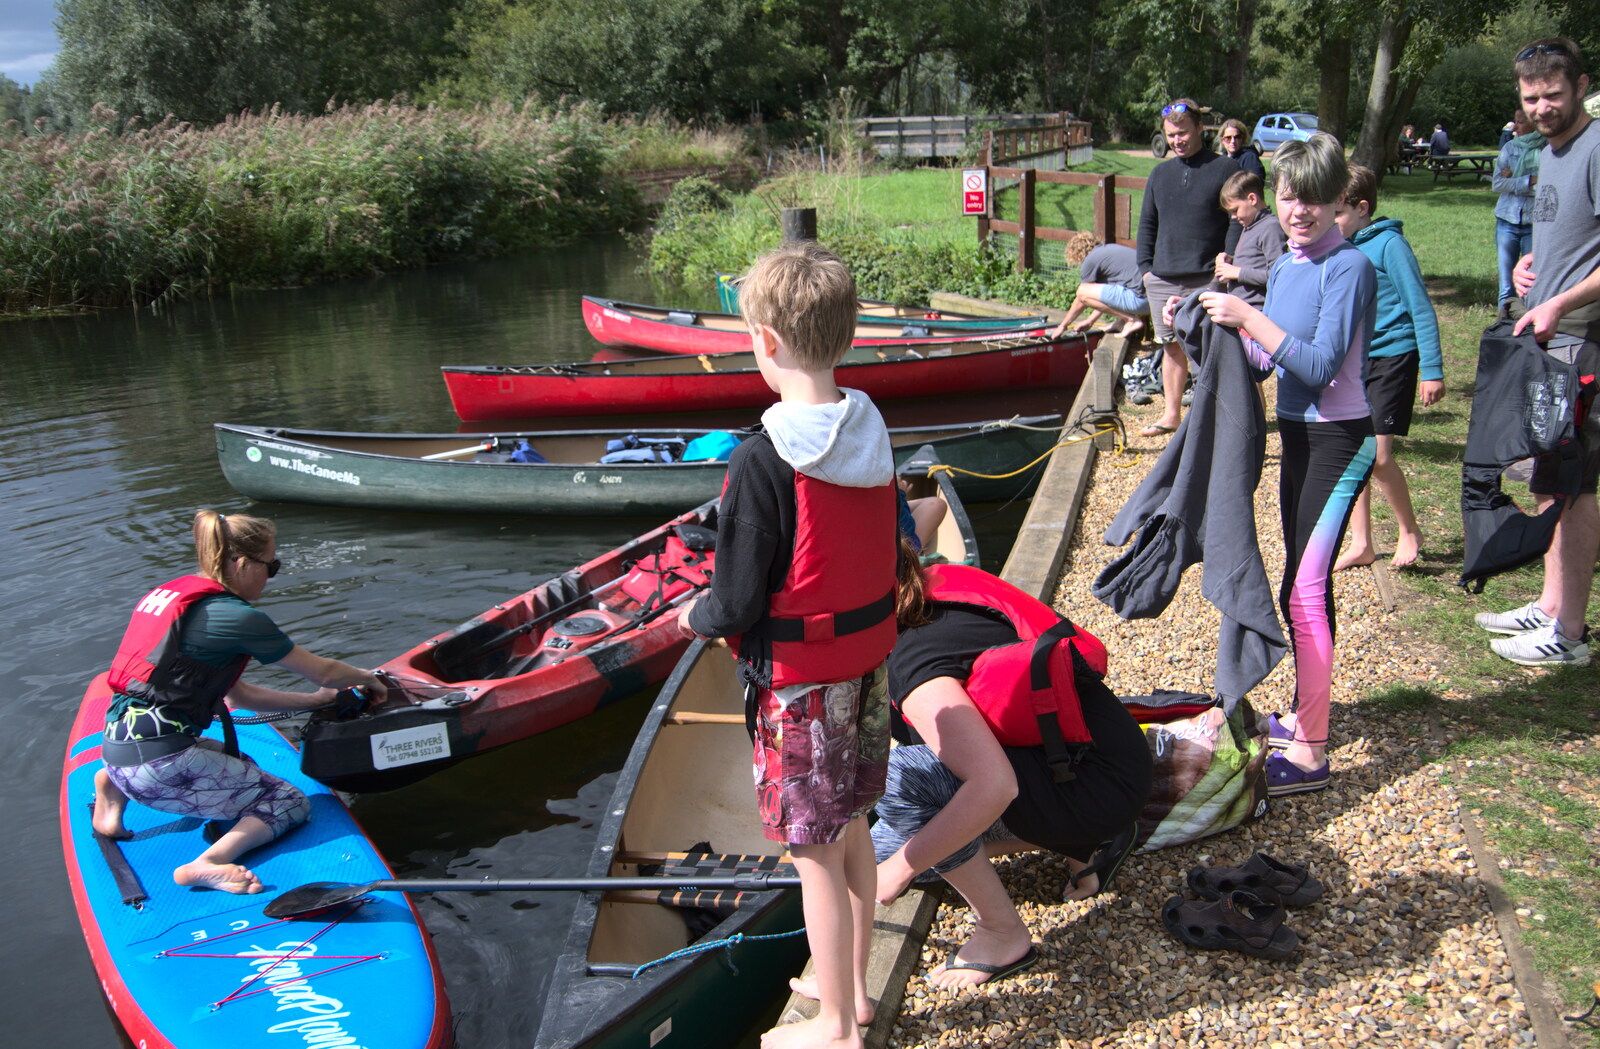 Camping at Three Rivers, Geldeston, Norfolk - 5th September 2020: We moor up at Geldeston Lock